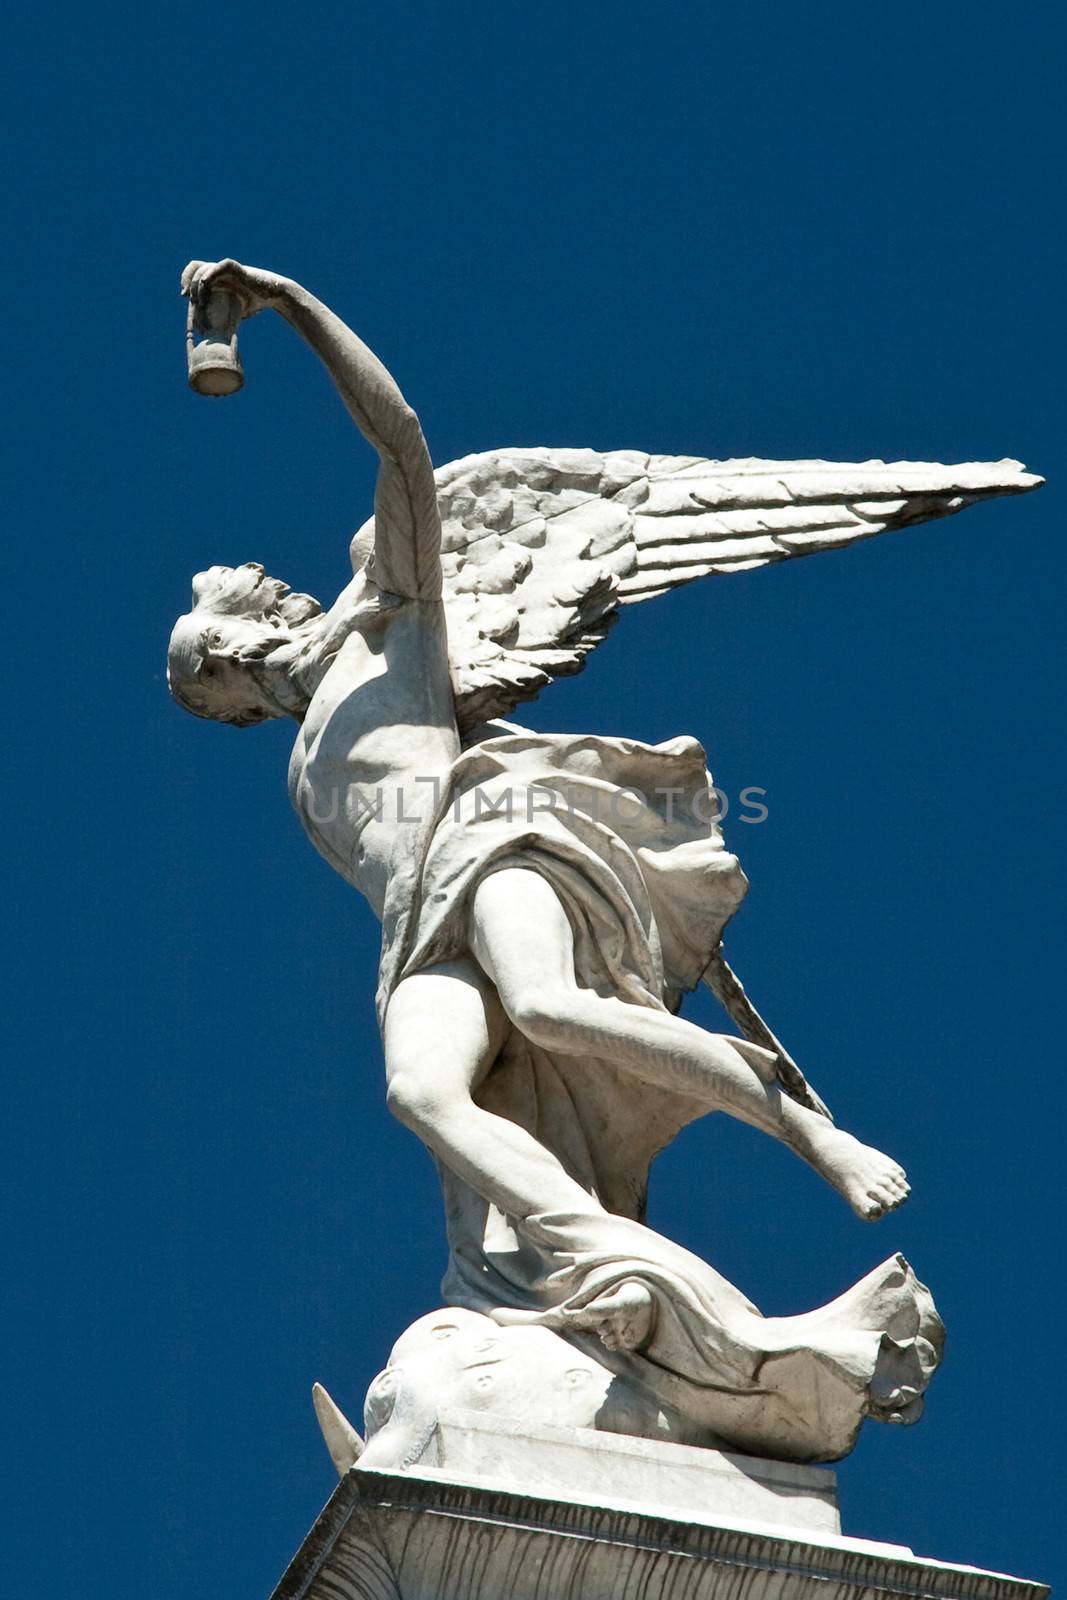 Angel statue in a cemetery by CelsoDiniz